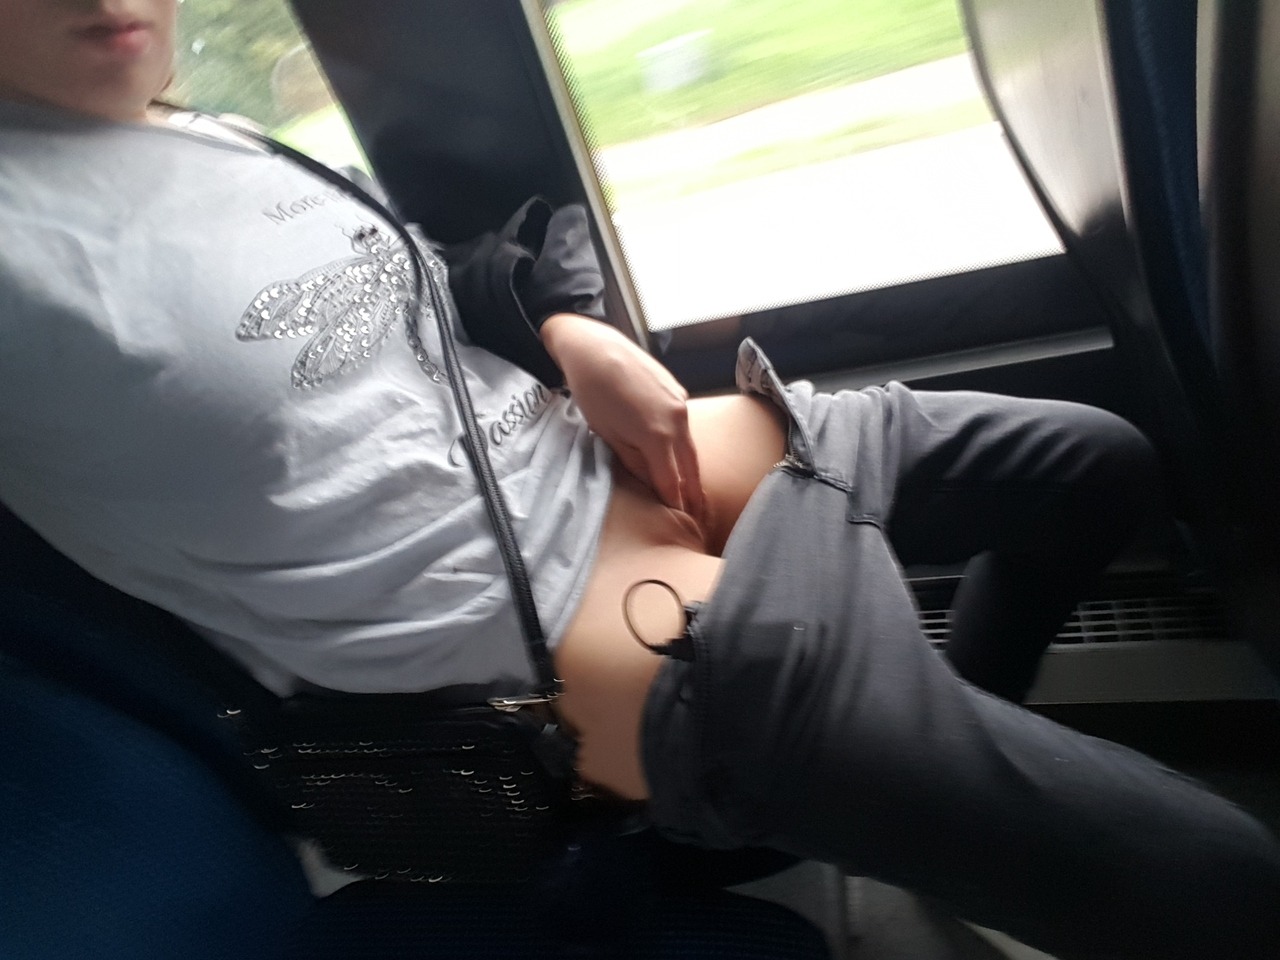 XXX 19yearoldslut: Yes I’m in the bus, touching photo